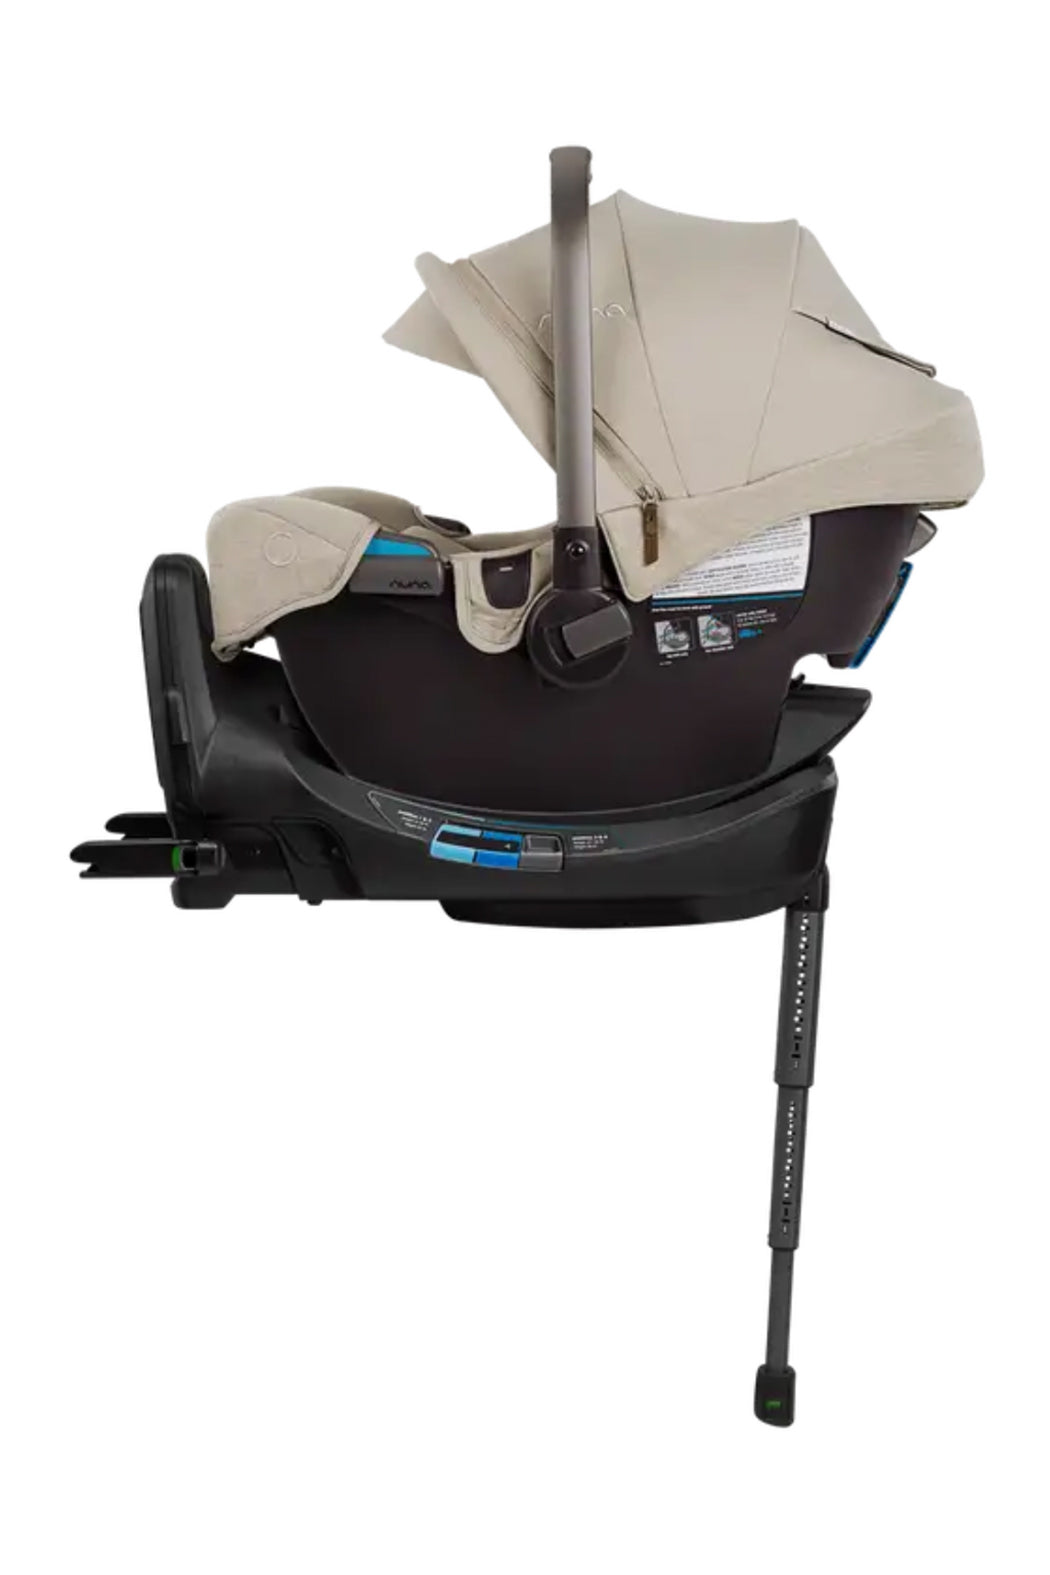 nuna Pipa RX Infant Car Seat + Reclining RELX Base